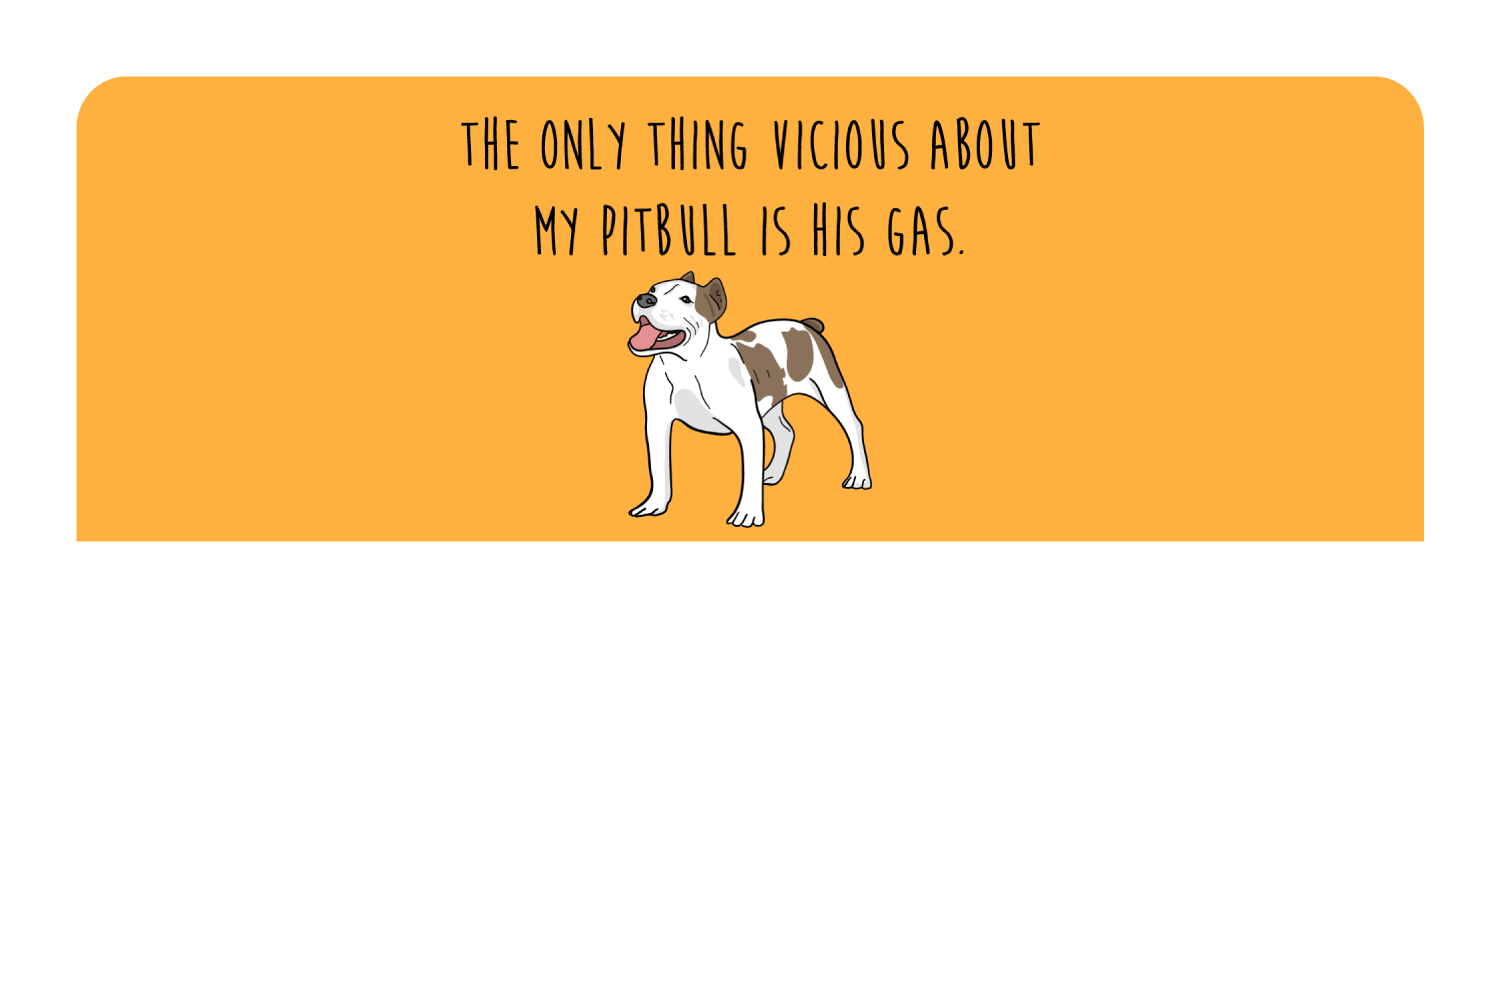 Pitbull gas